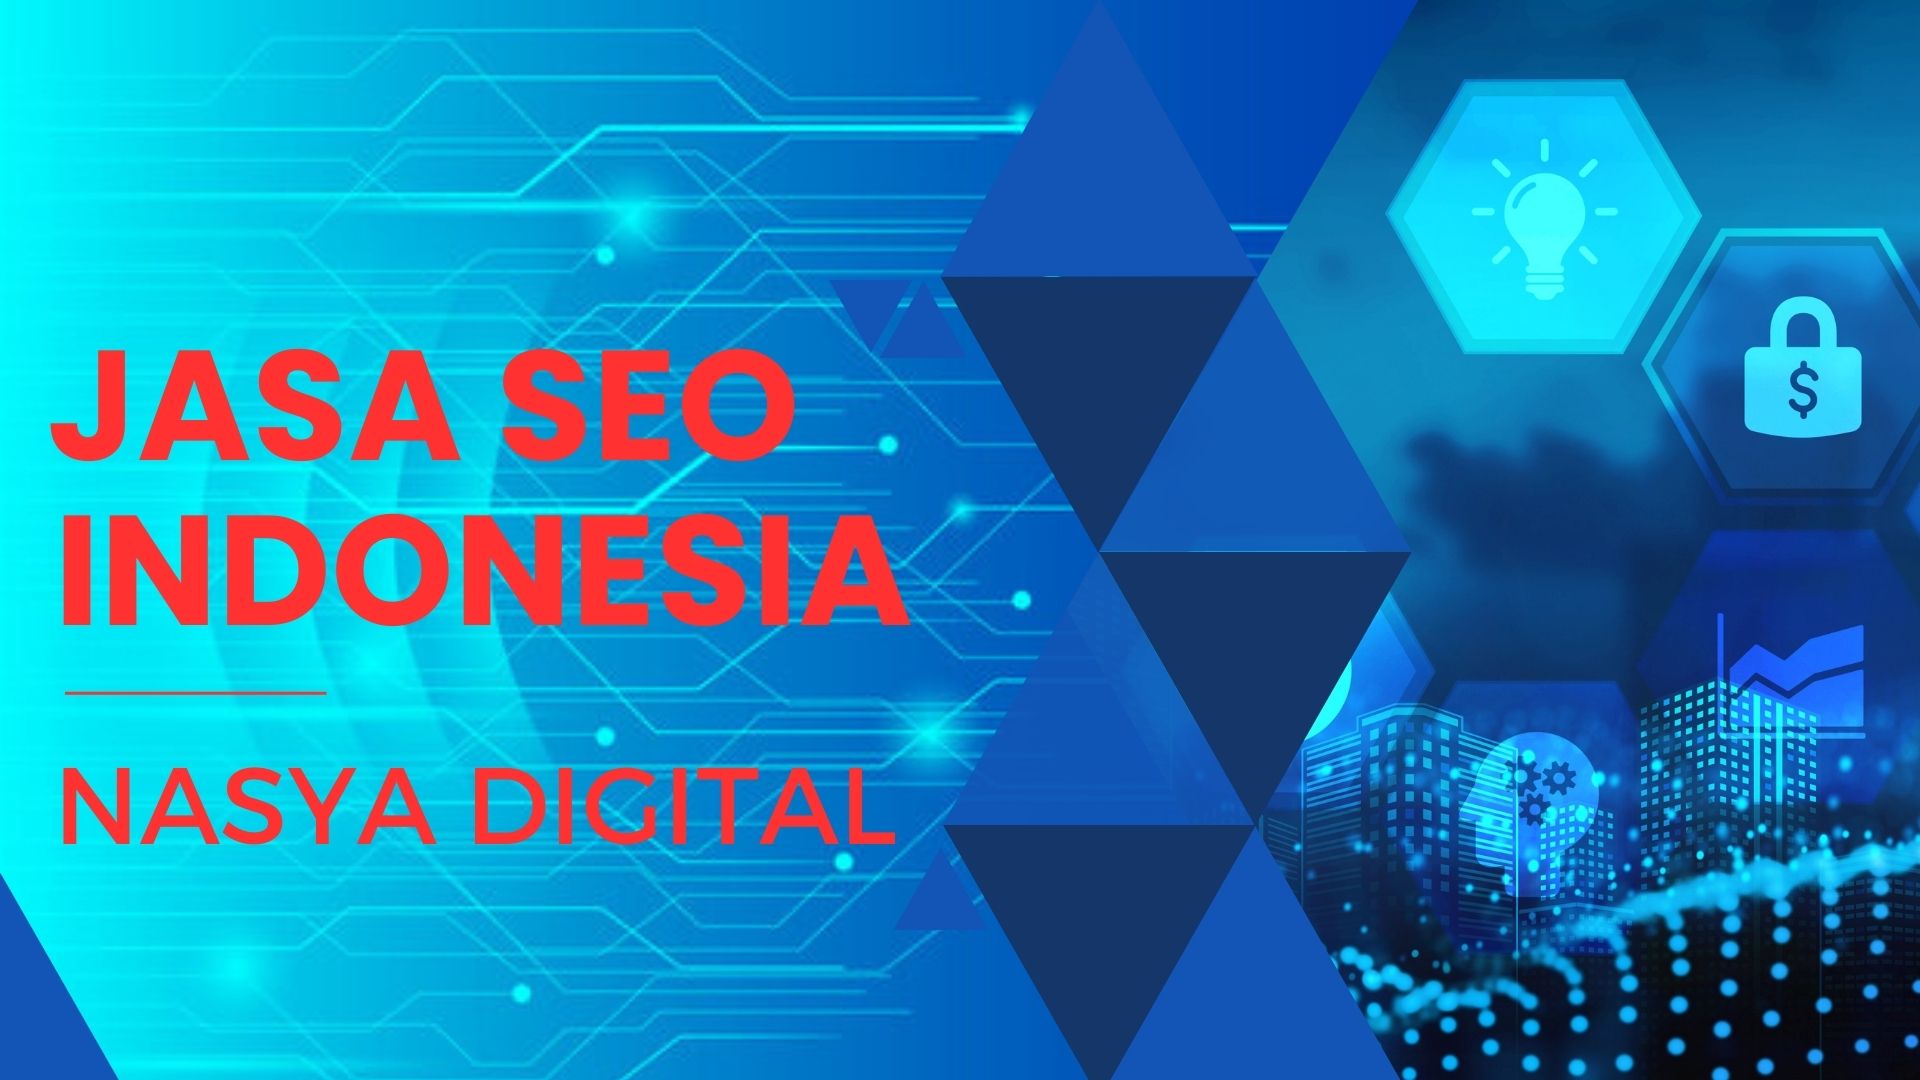 Jasa SEO Indonesia Posisi Ranking Terbaik di Google, Hubungi WA 081222555757